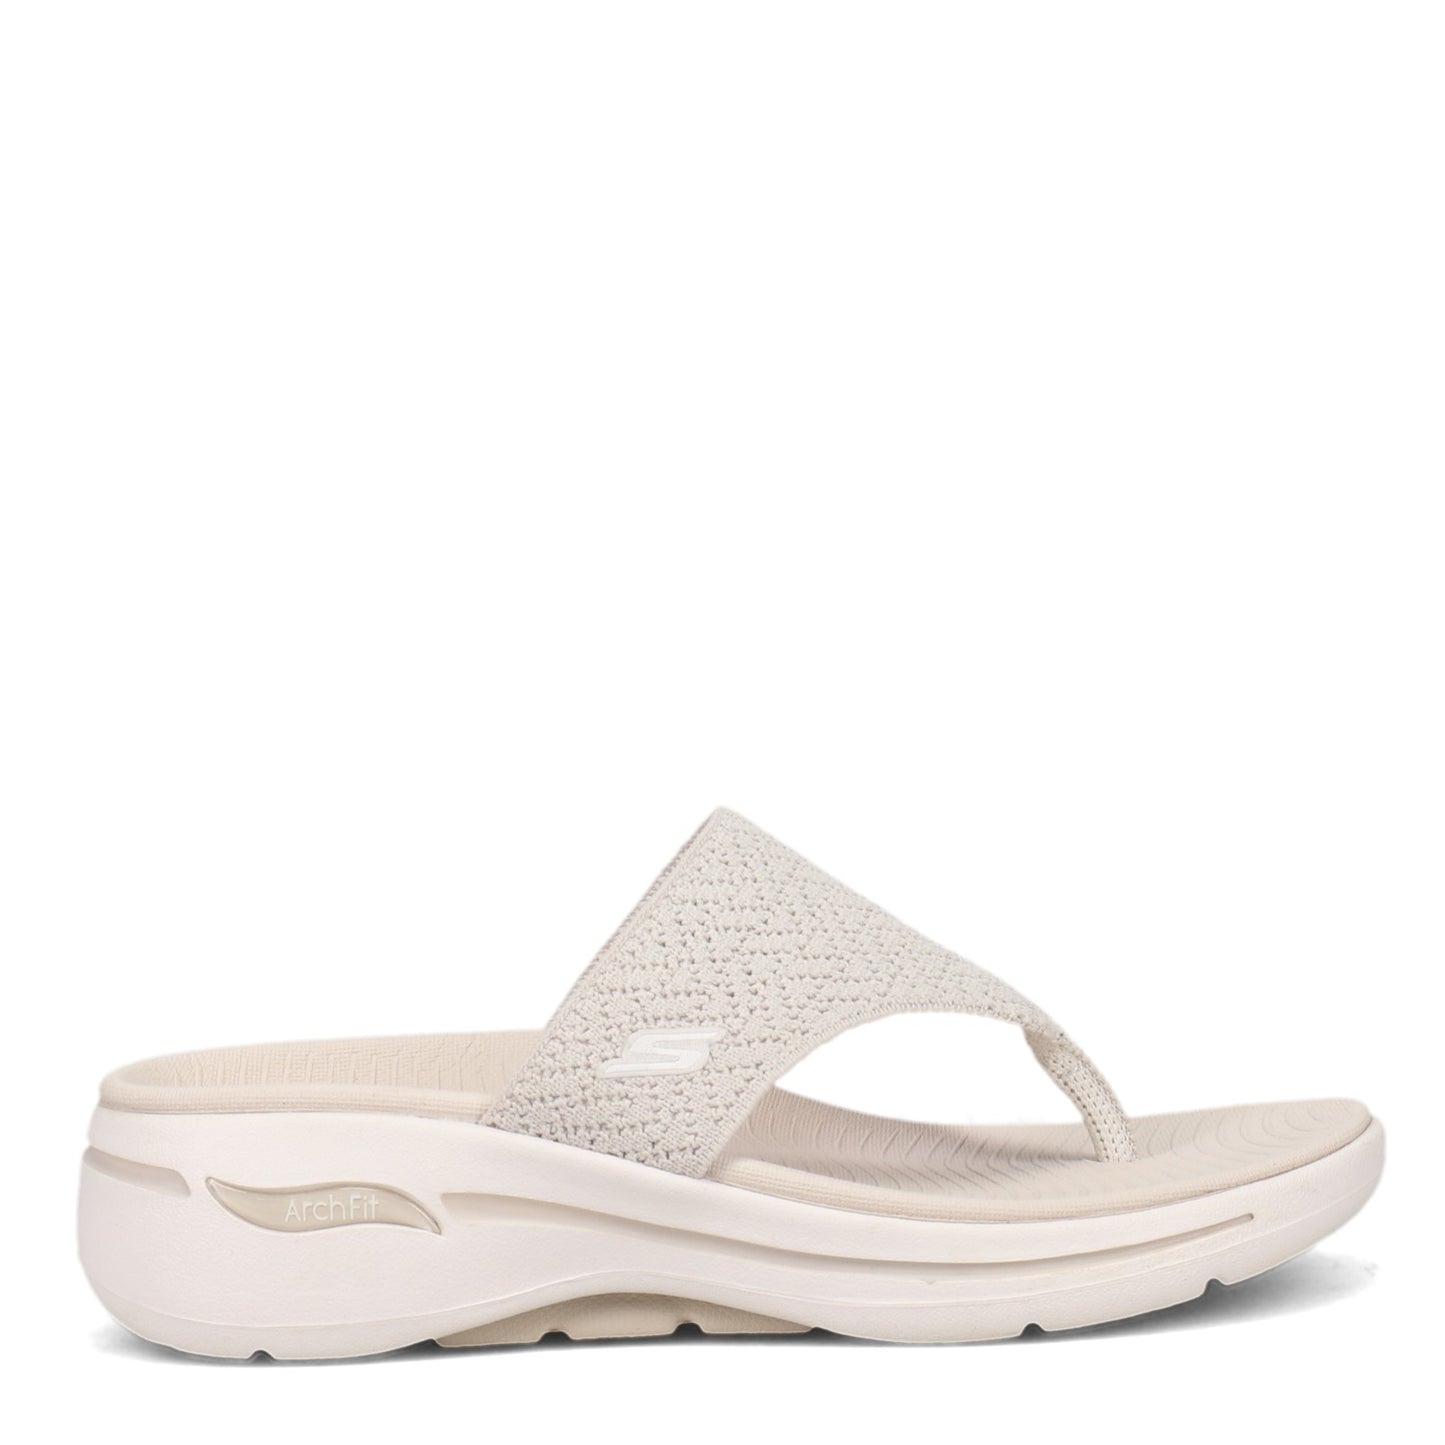 Peltz Shoes  Women's Skechers GOwalk Arch Fit - Weekender Sandal NATURAL 140221-NAT